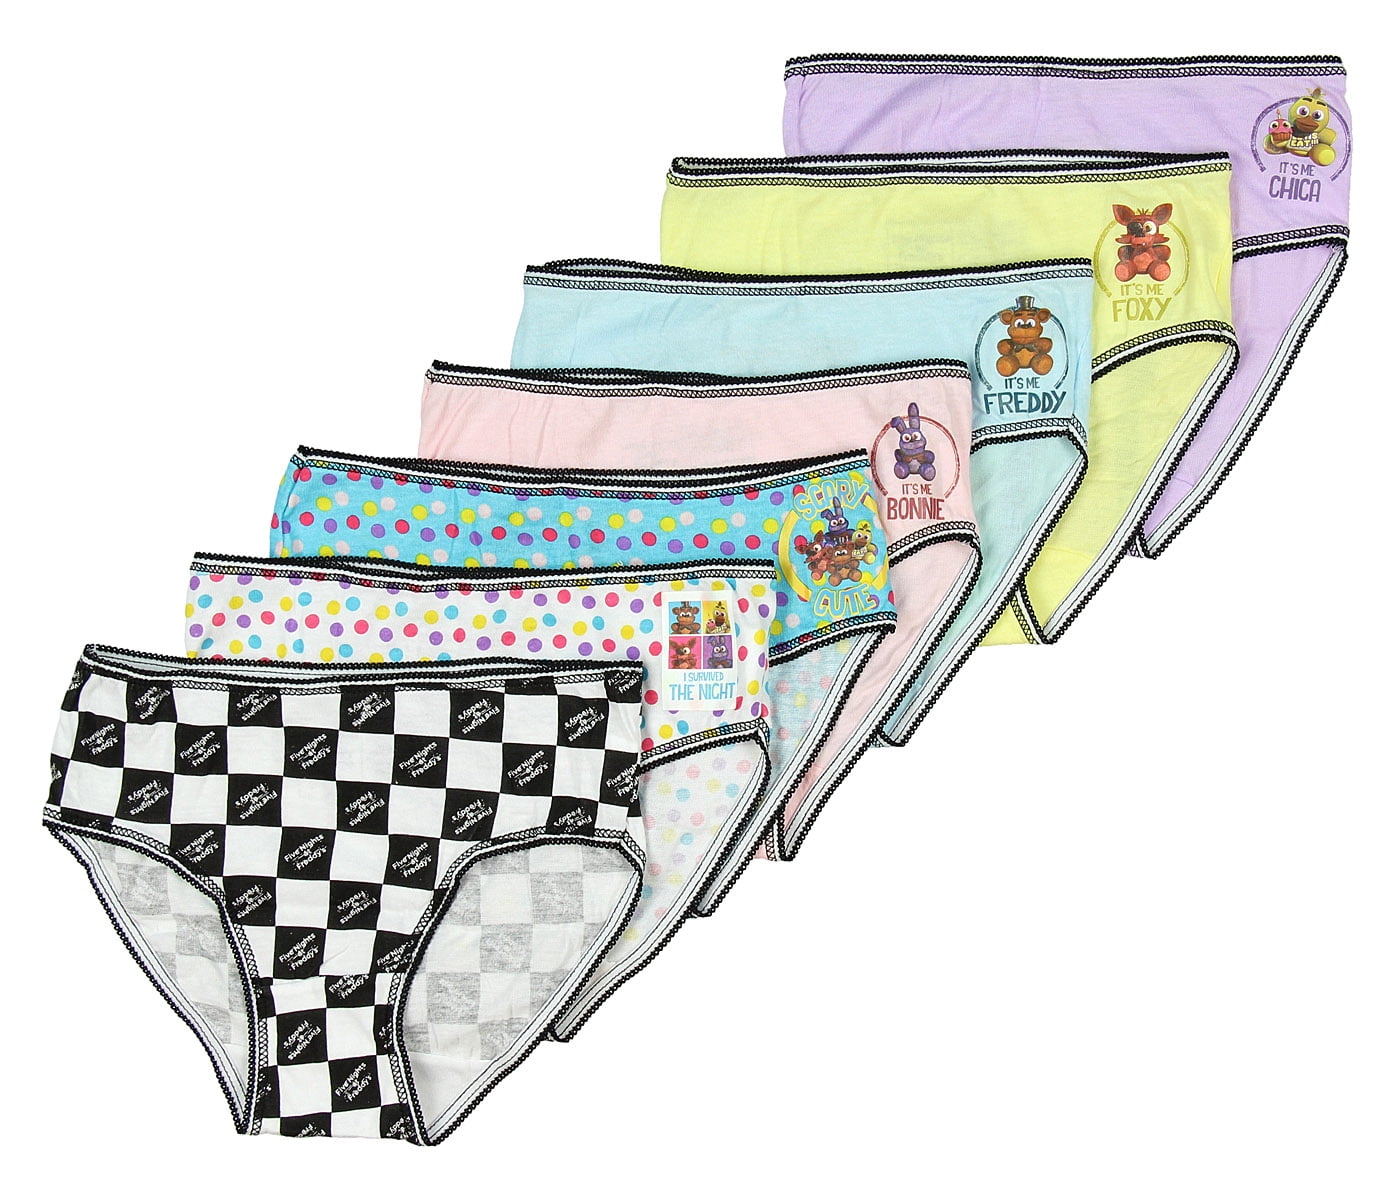 Details about   Vampirina Toddler Girls' Underwear Panties 7 Pair Assorted Colors  2T 3T 4T 